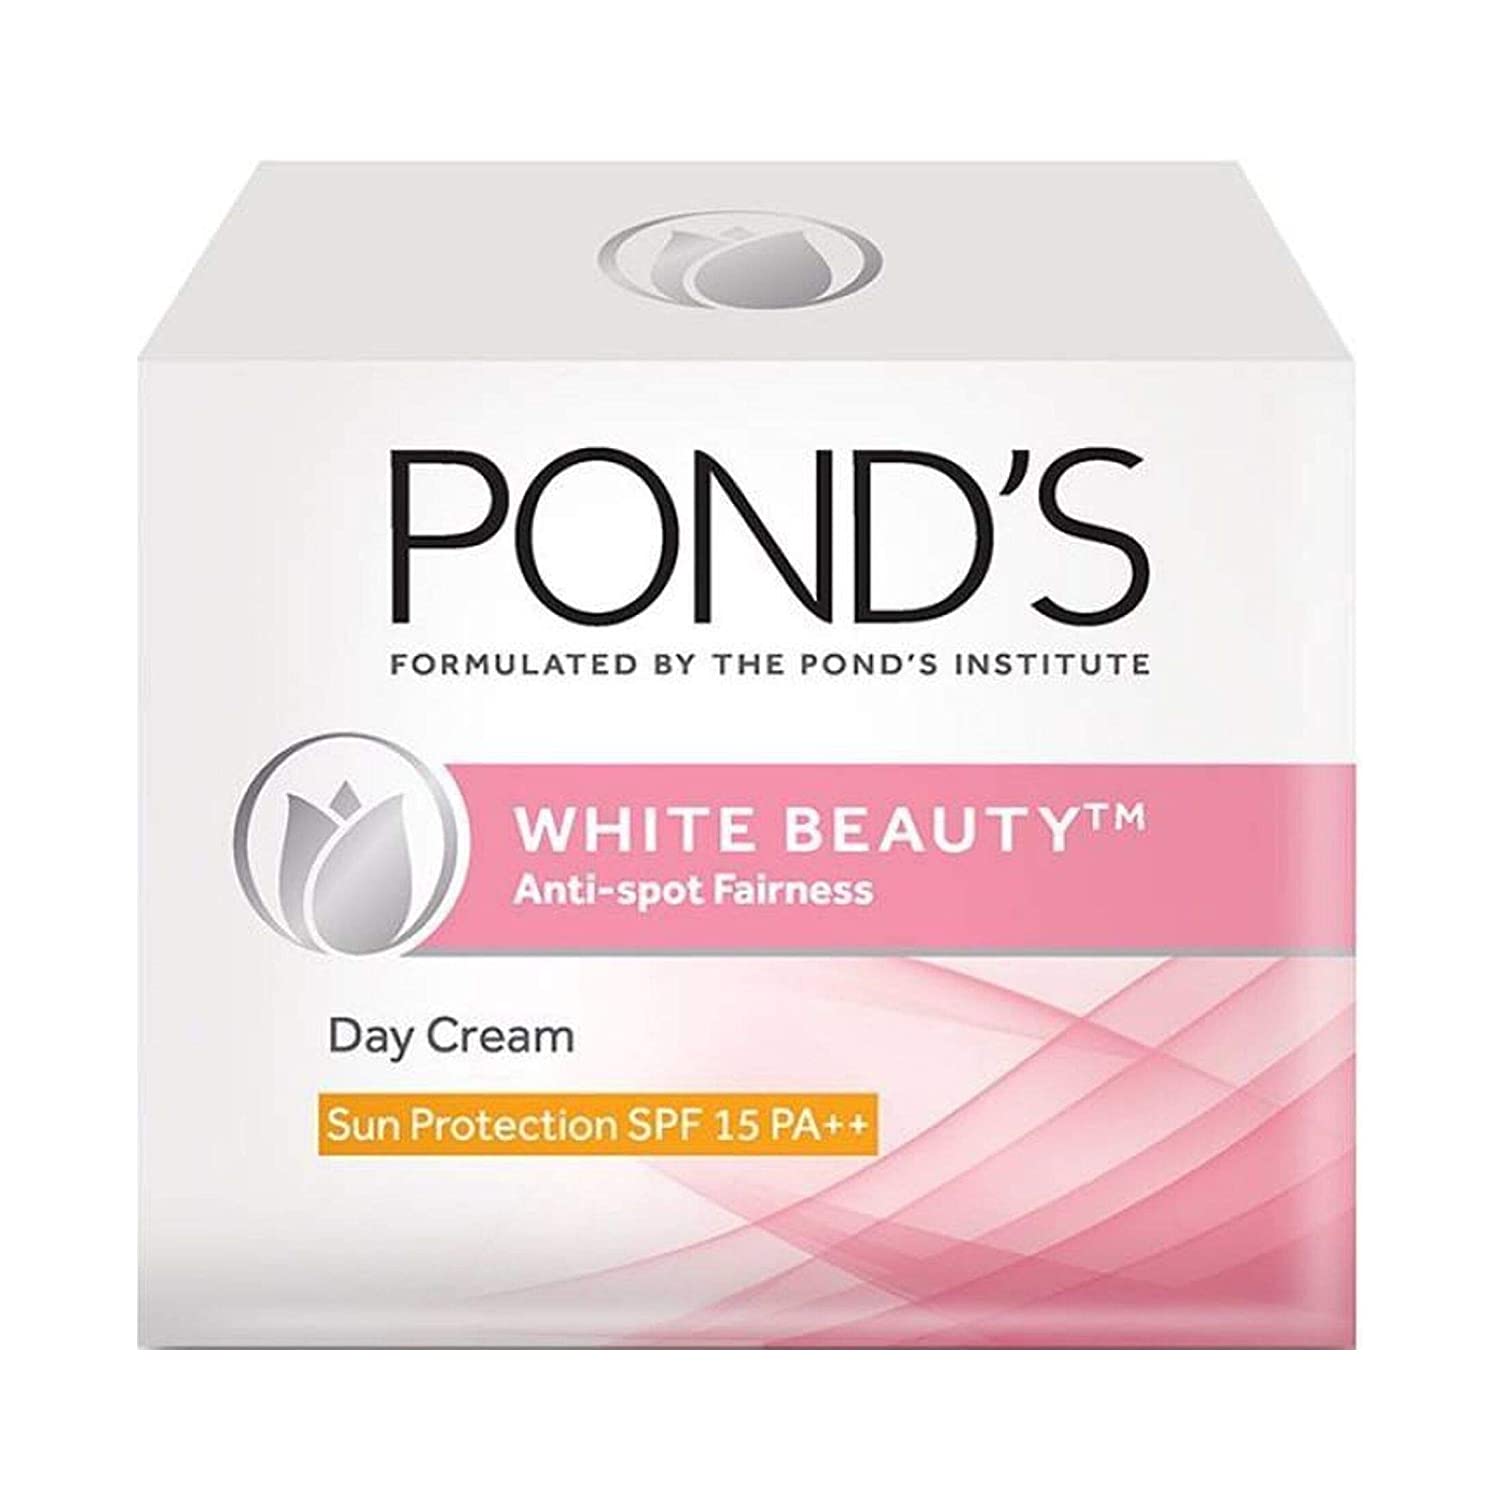 Ponds White beauty cream Fairness Cream Brands in The World